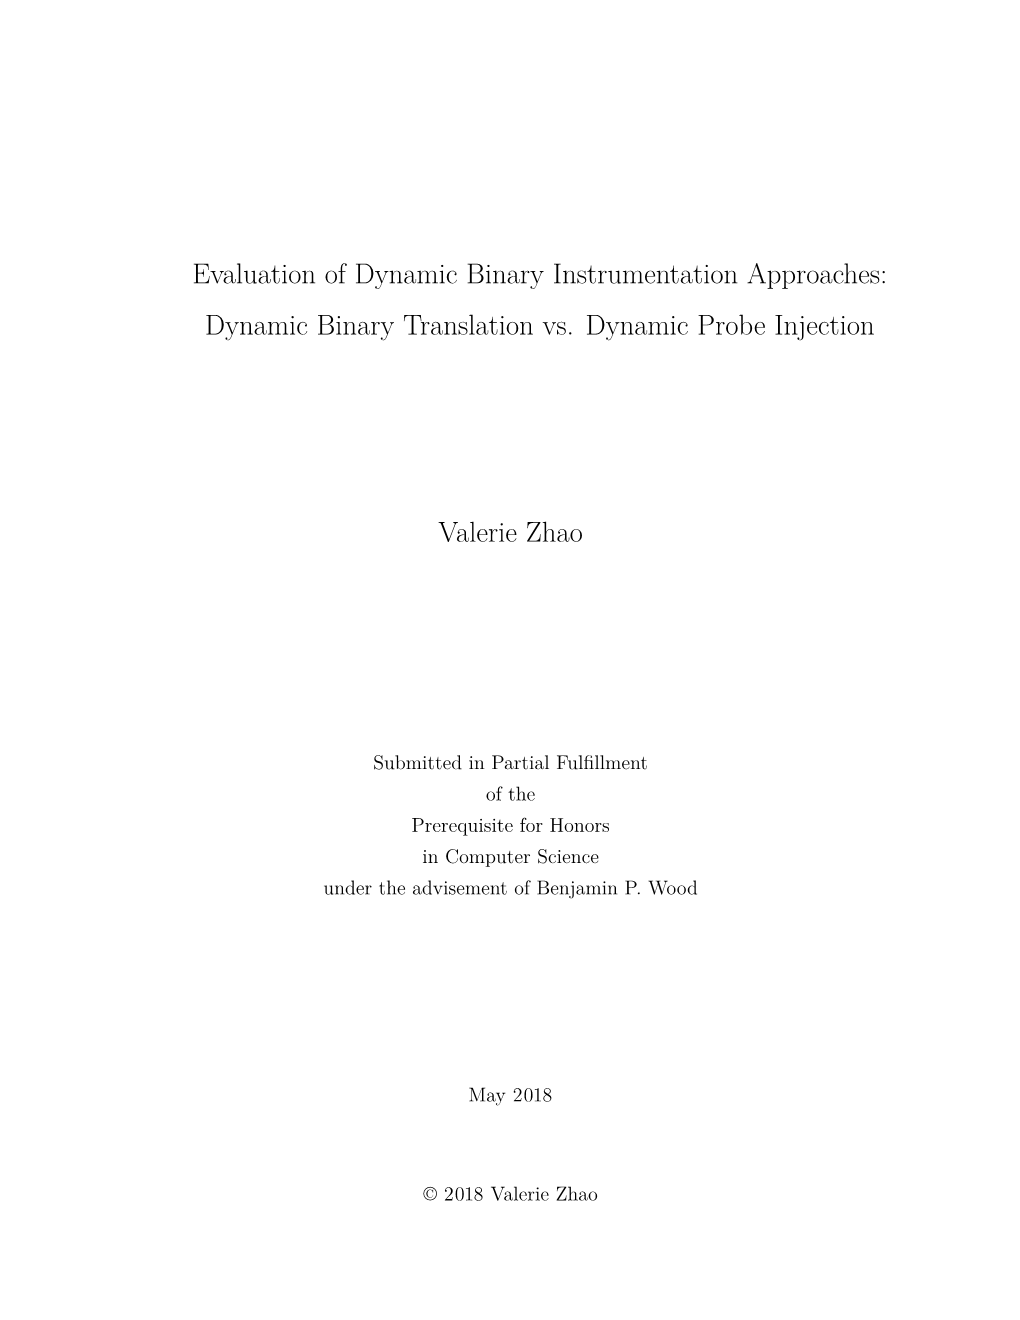 Evaluation of Dynamic Binary Instrumentation Approaches: Dynamic Binary Translation Vs